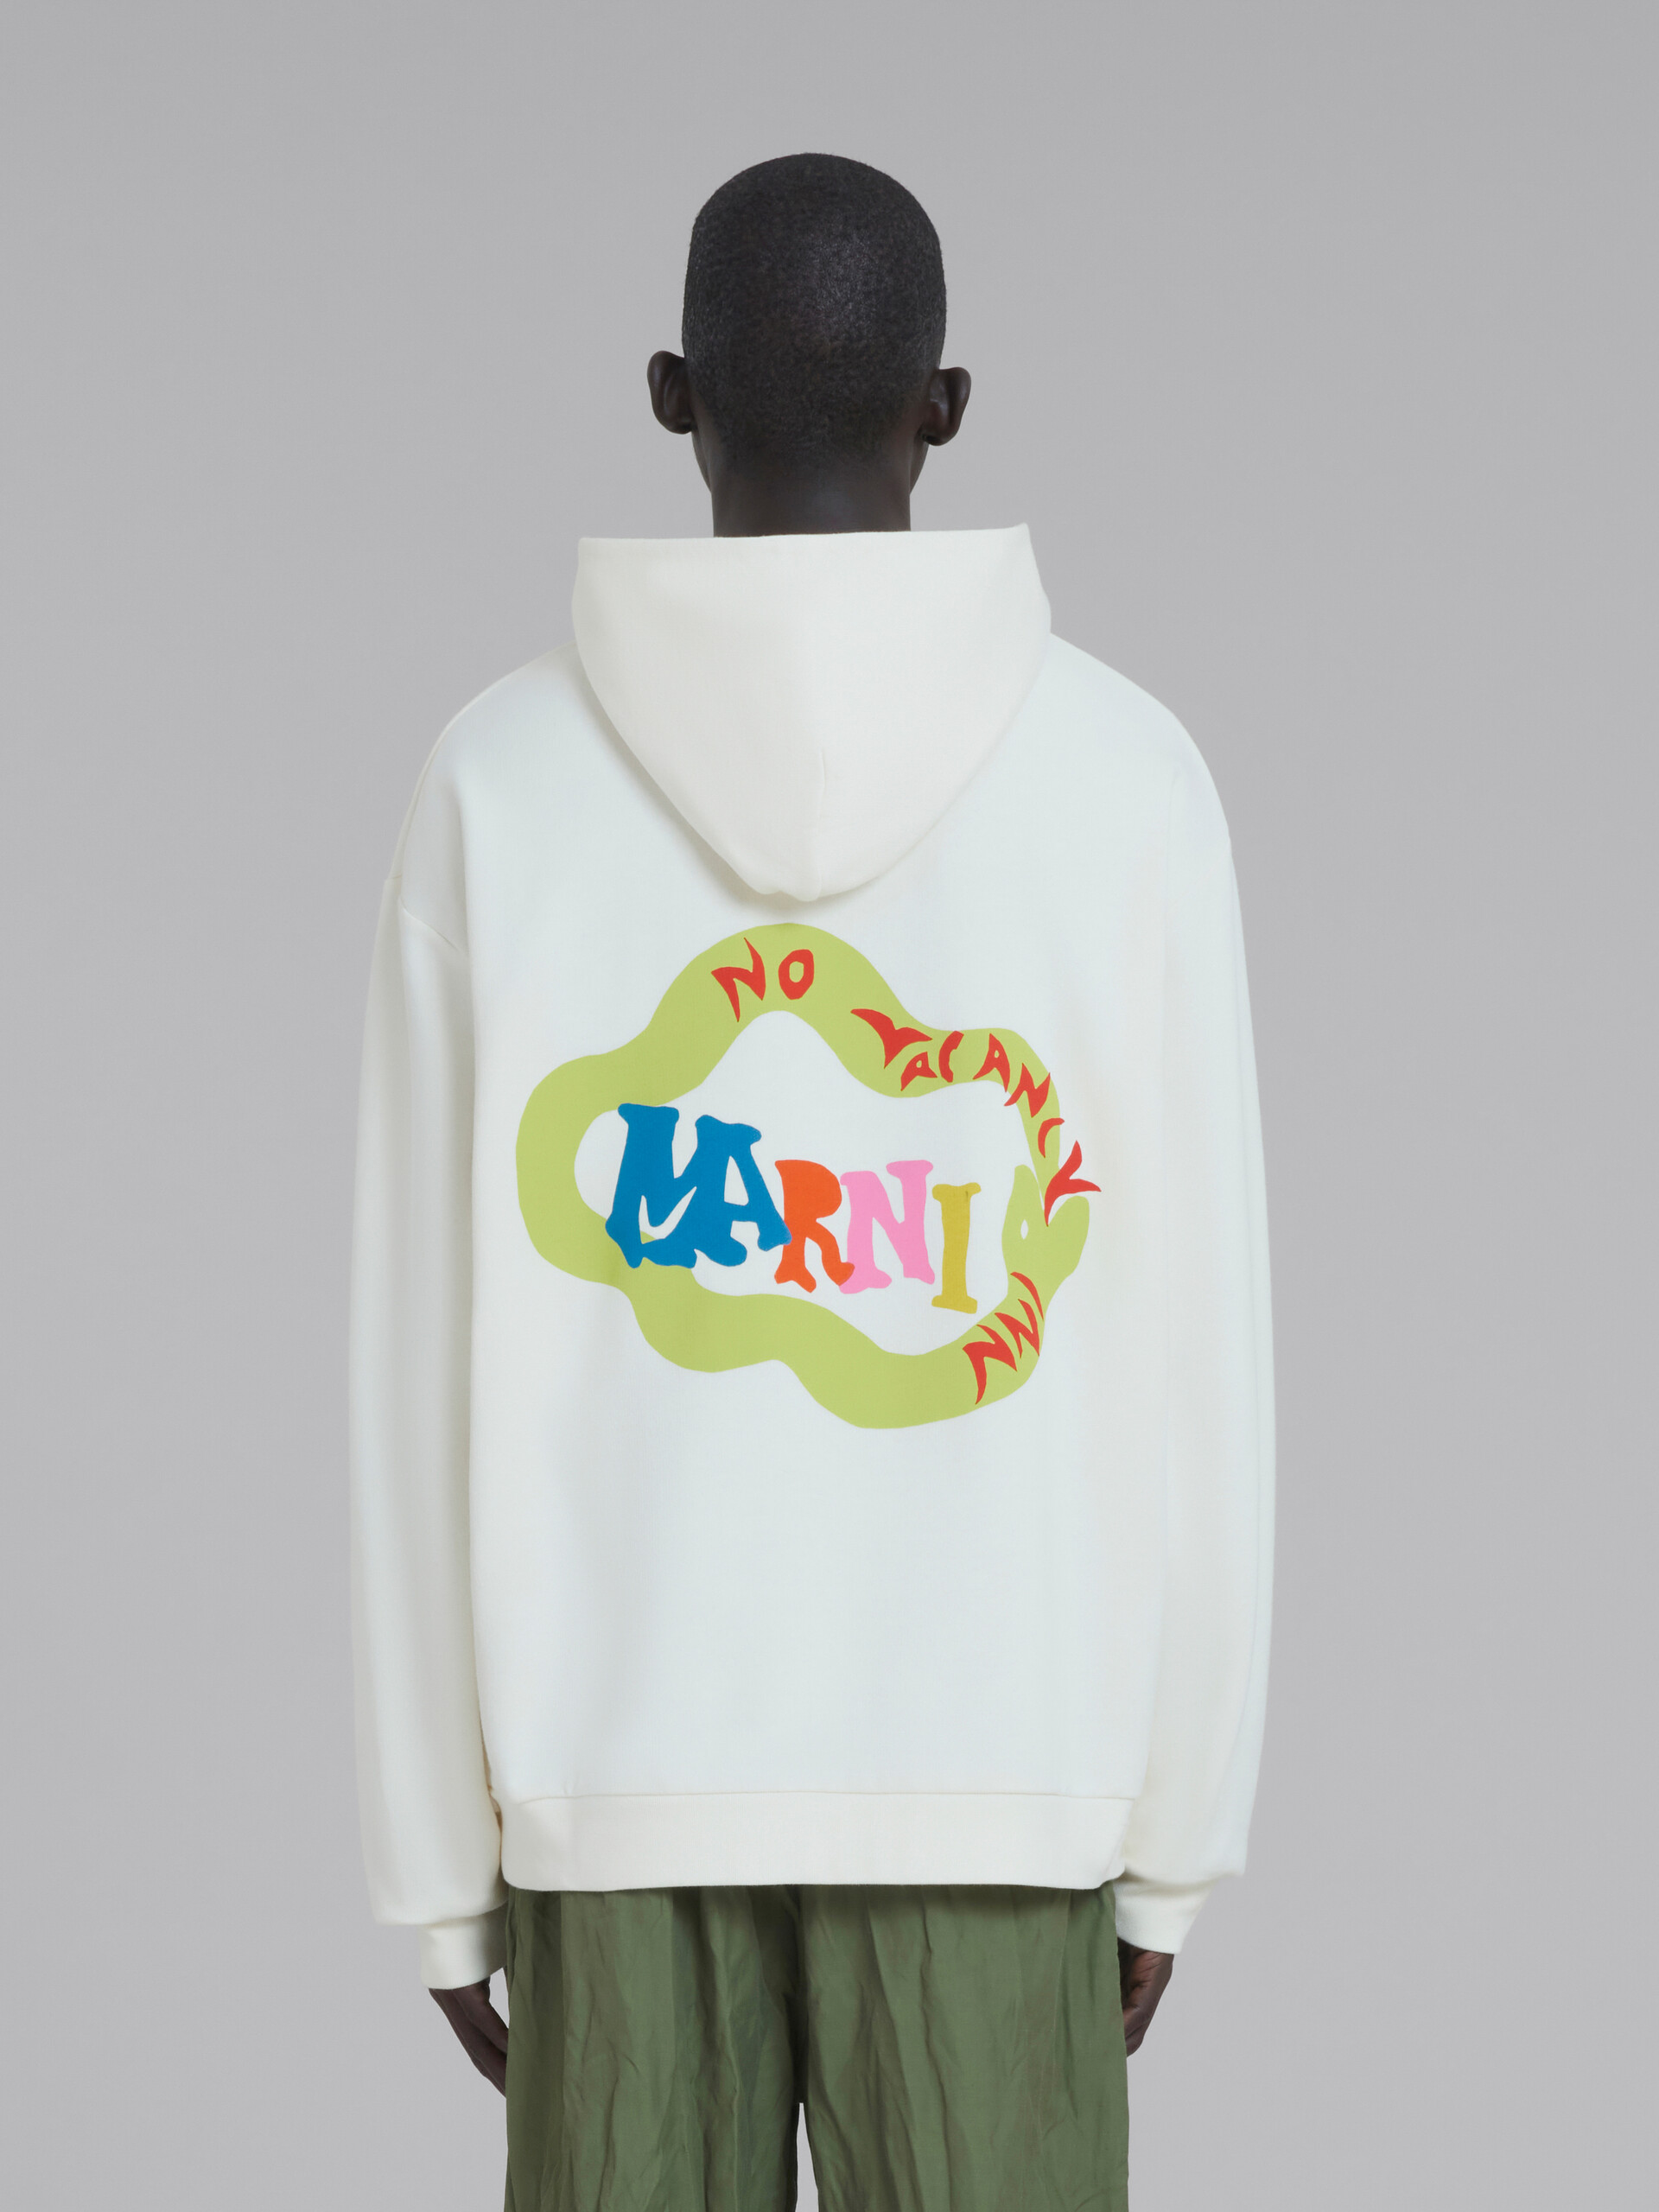 Marni x No Vacancy Inn - White sweatshirt in bio cotton jersey with snake logo print - Sweaters - Image 3